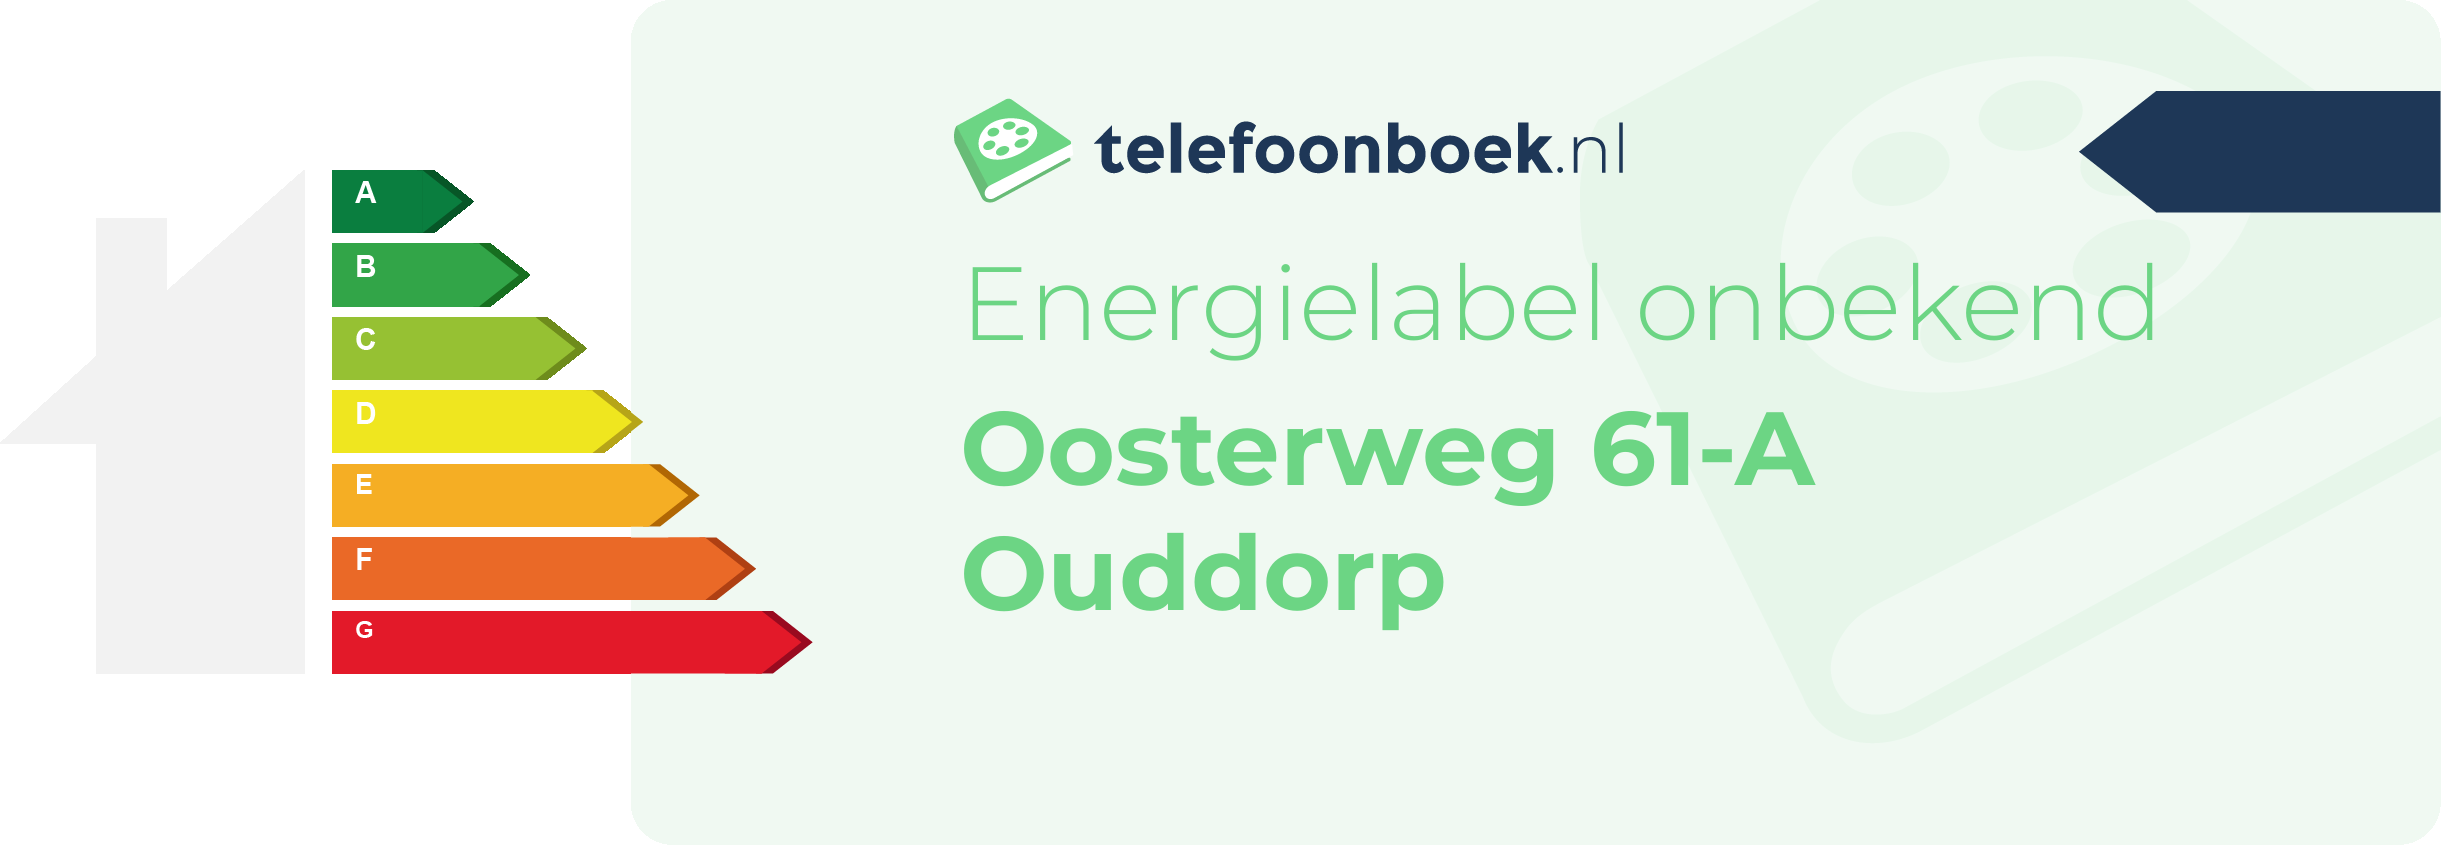 Energielabel Oosterweg 61-A Ouddorp